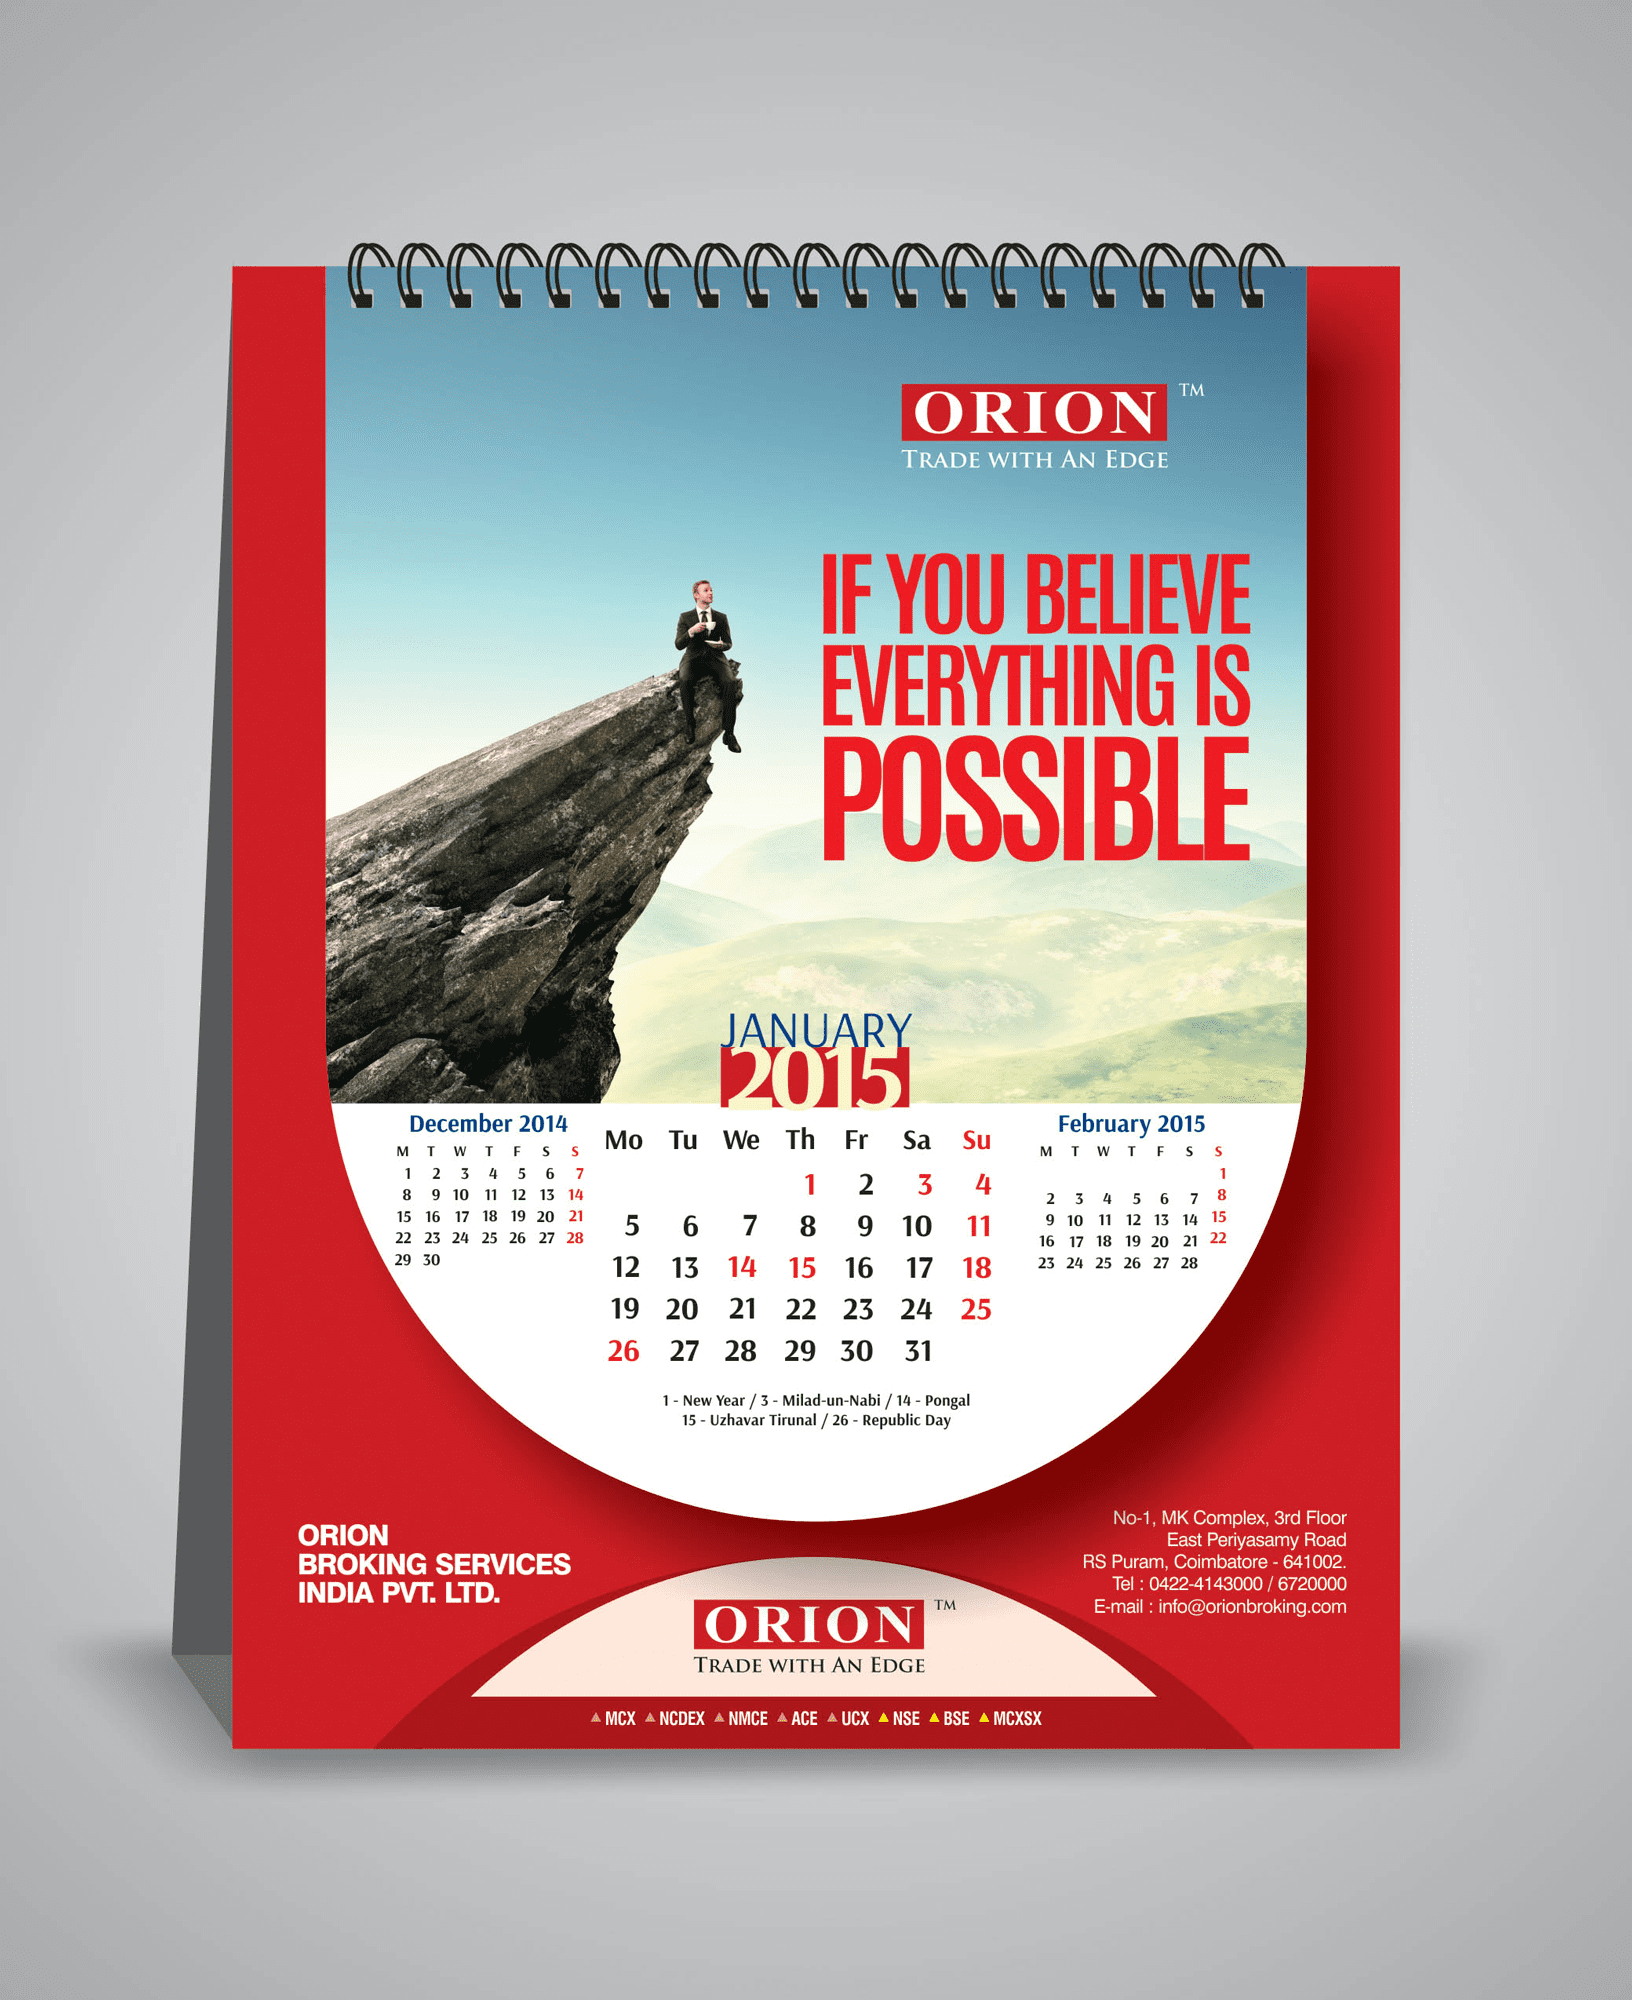 Orion 2015 Calendar Graphic Design, Branding Packaging Design in Erode by Creative Prints thecreativeprints